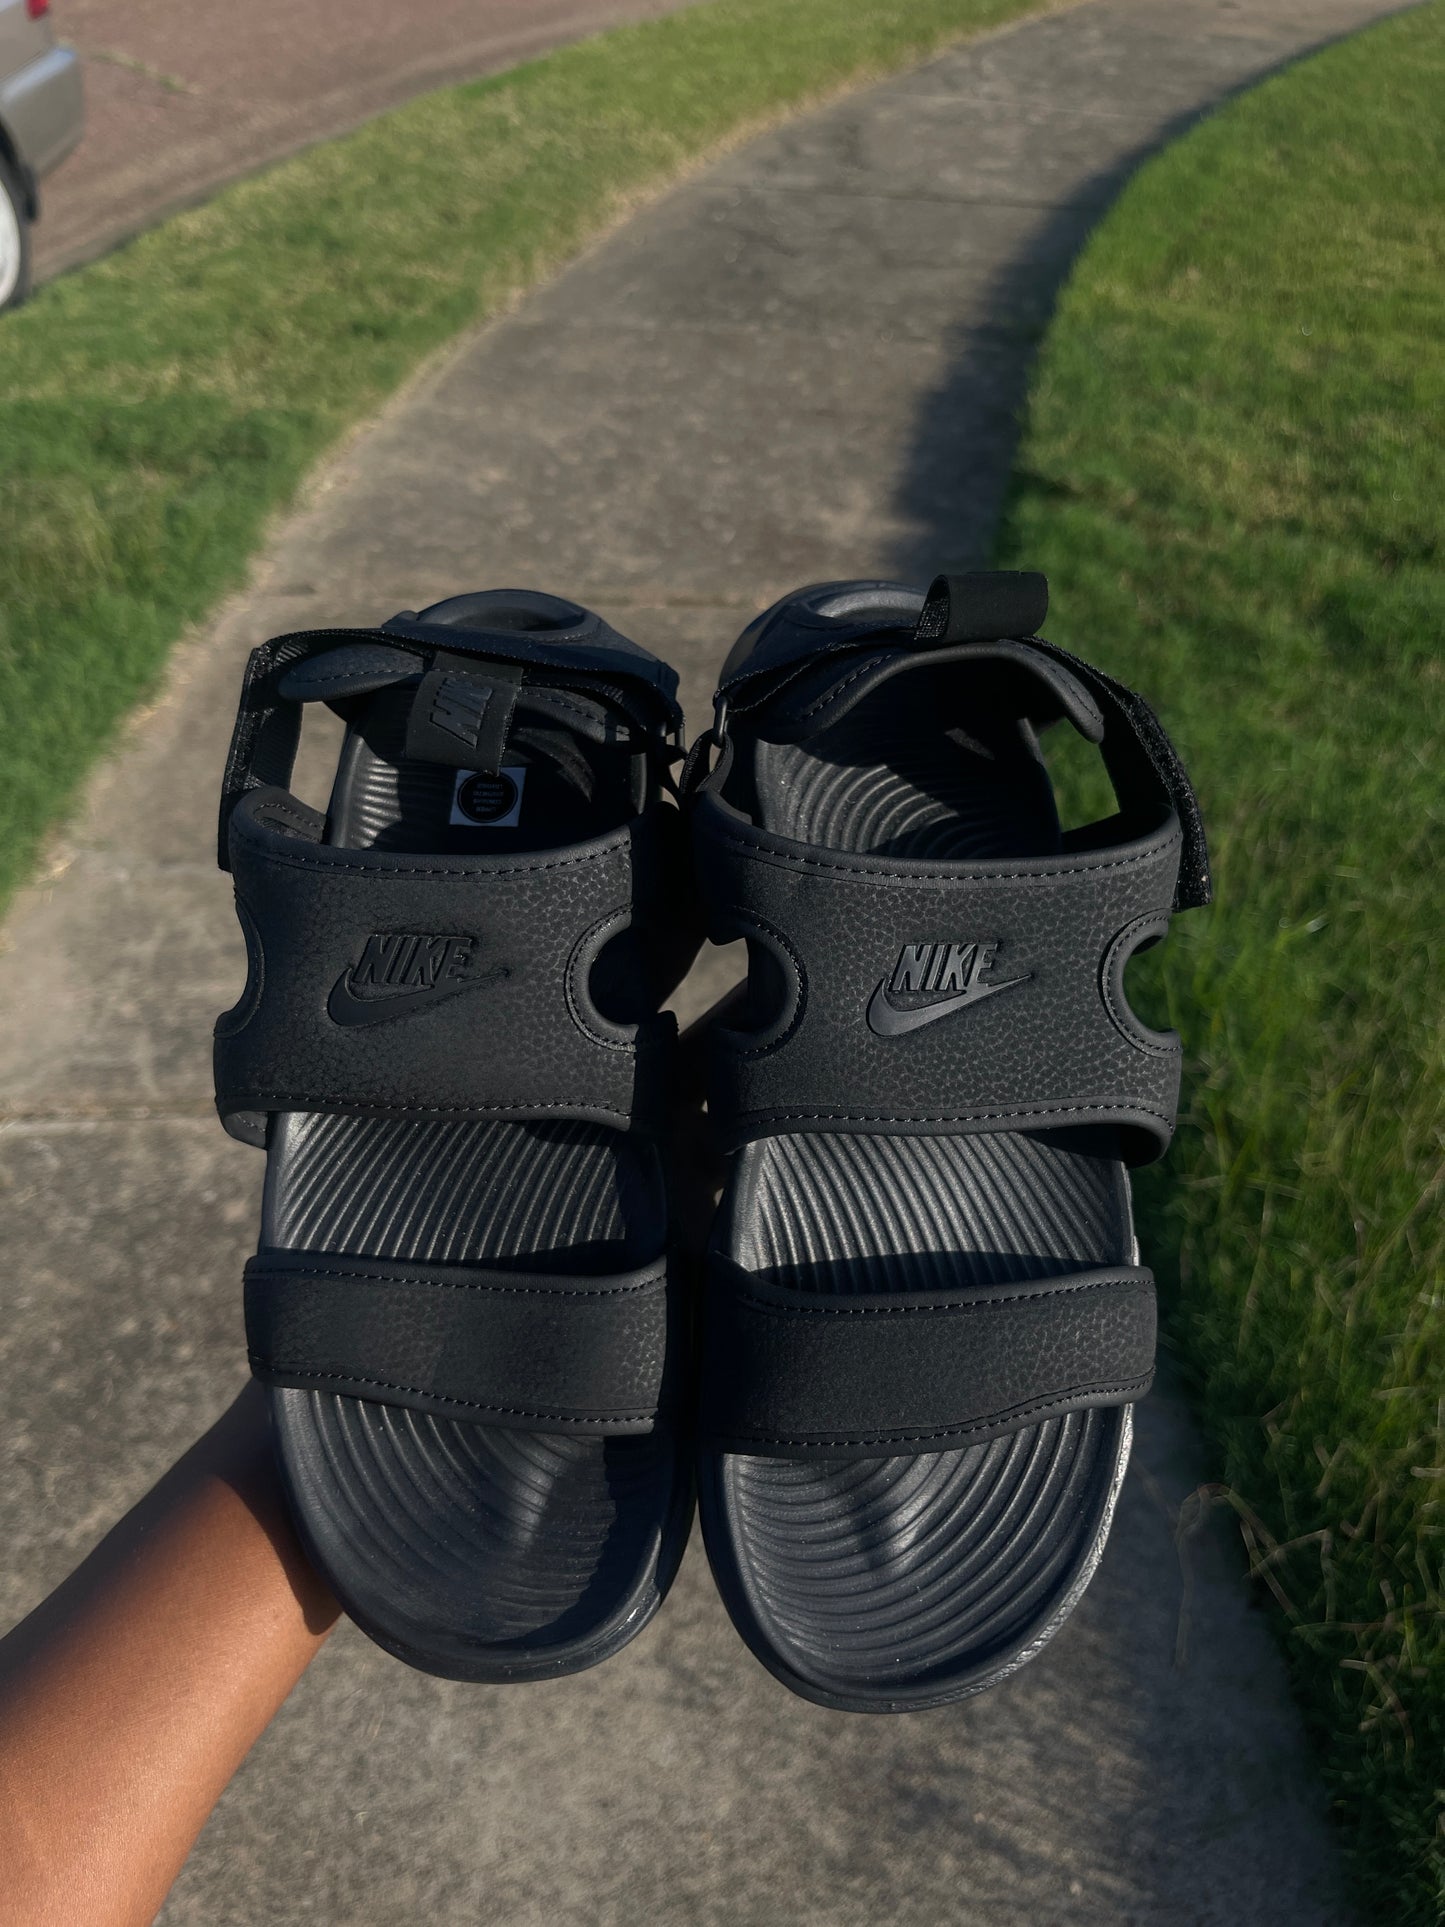 NEW Nike sandals black women sz 8